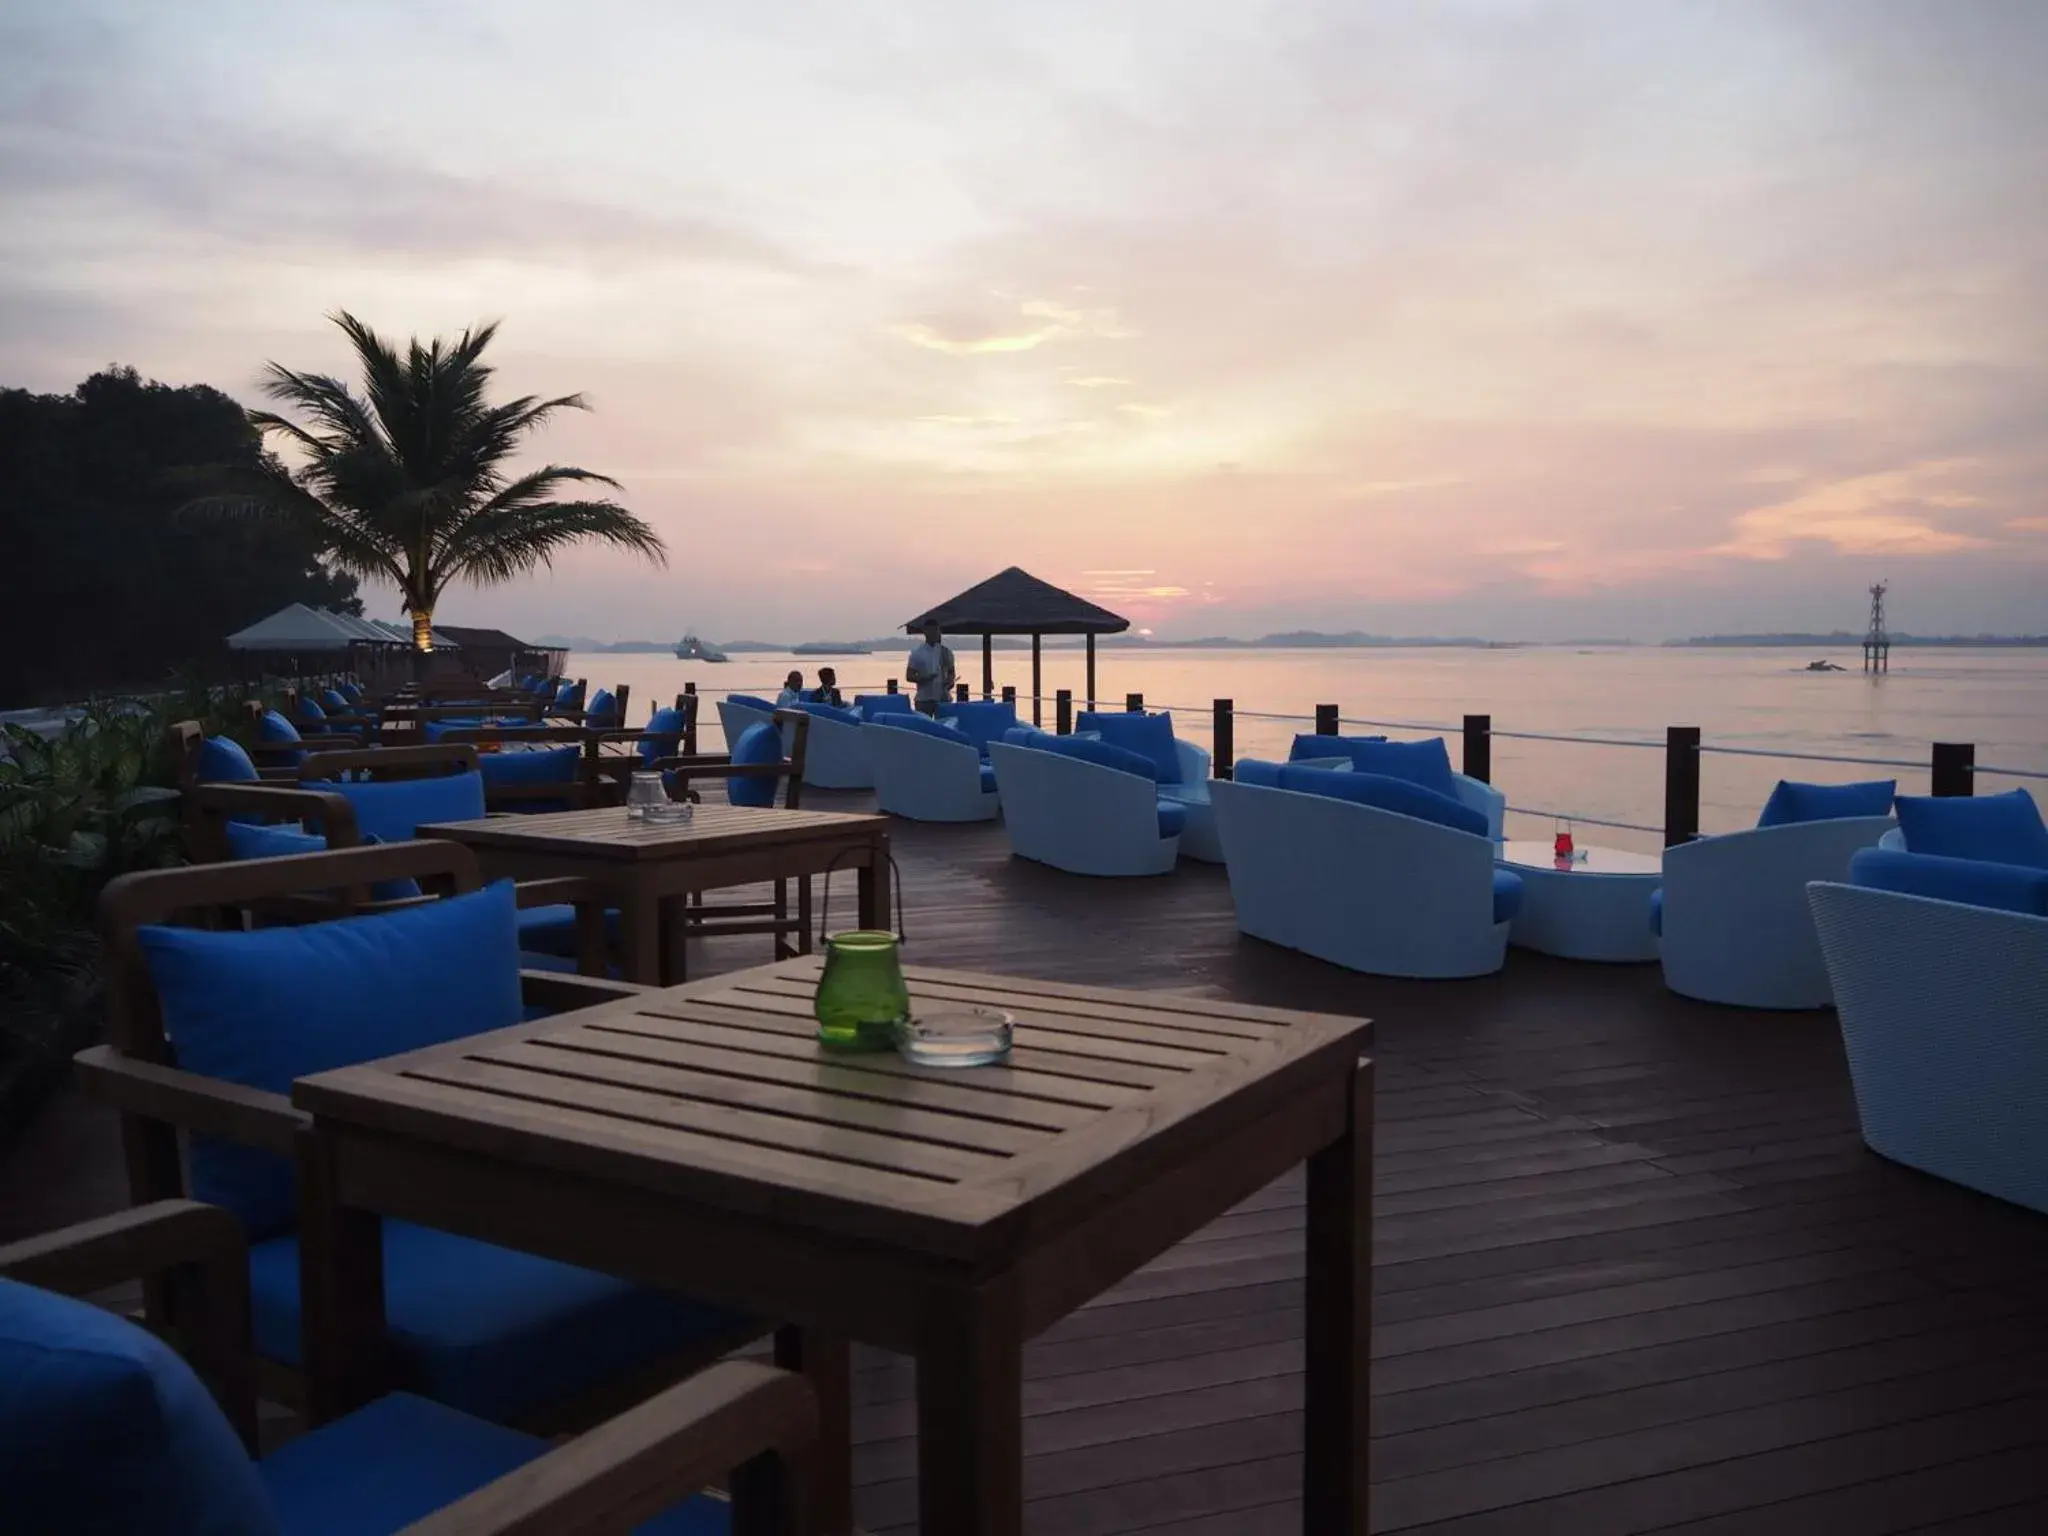 Restaurant/places to eat, Sunrise/Sunset in KTM Resort Batam